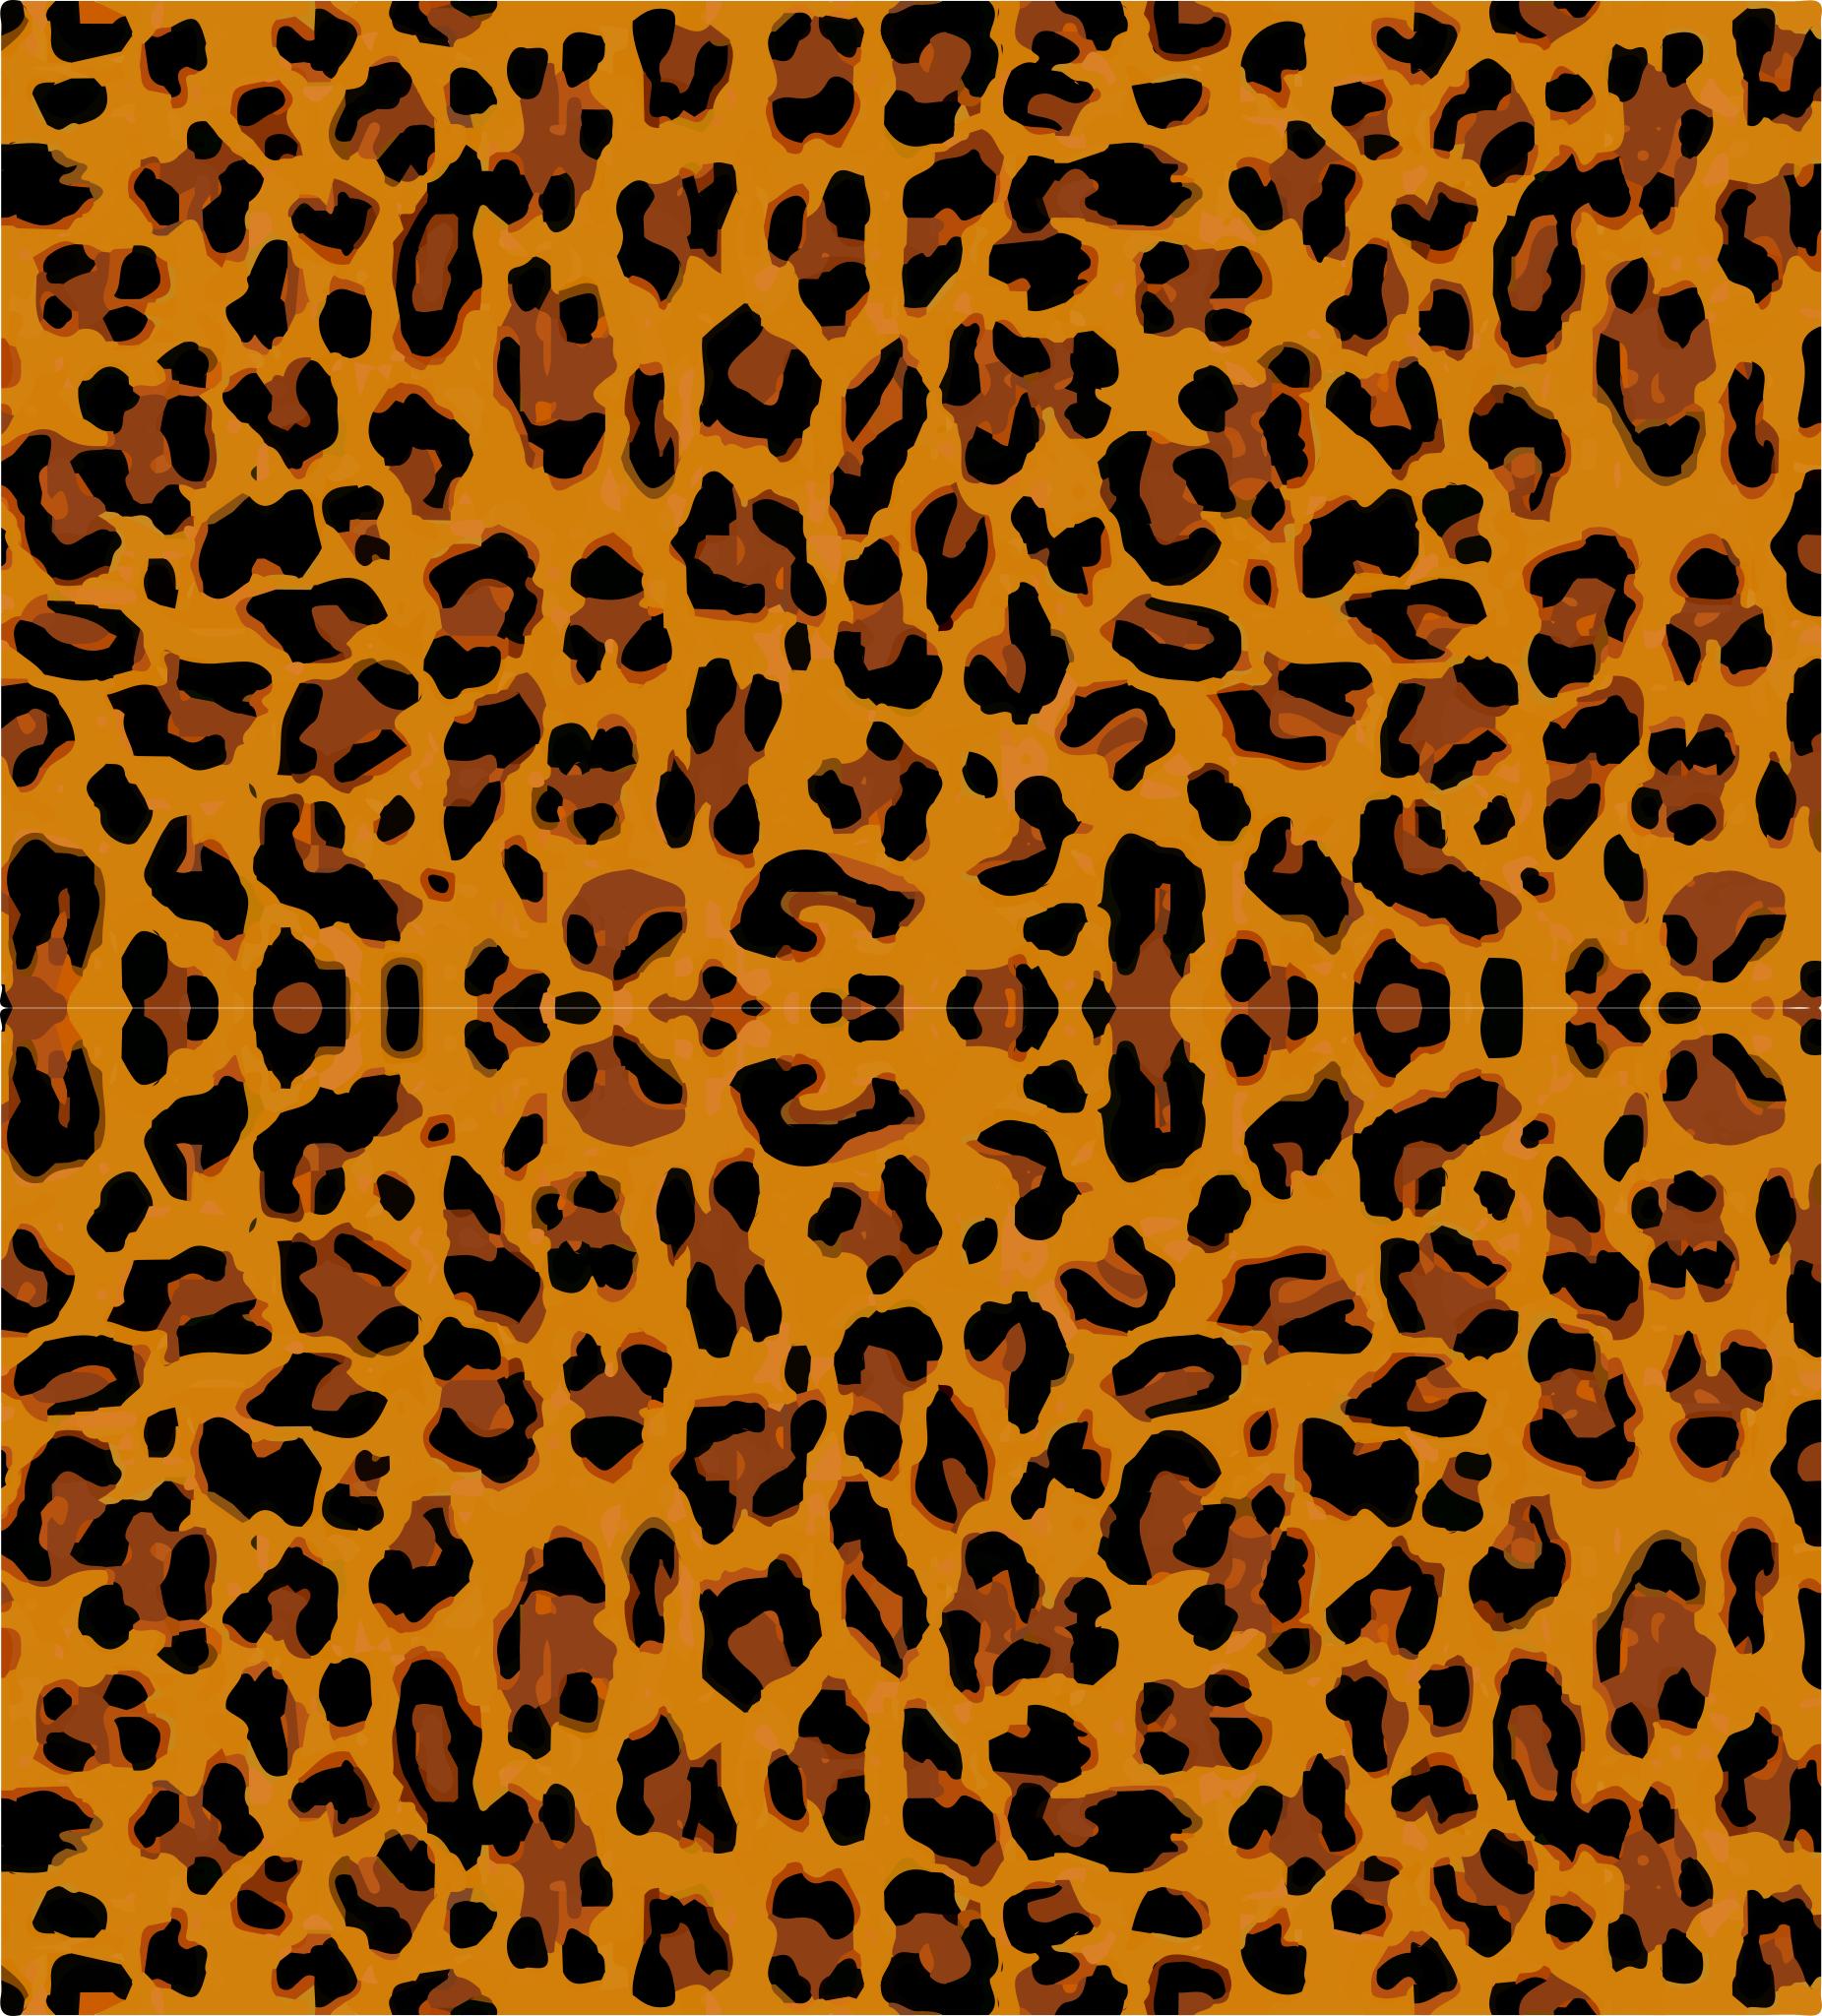 Леопардовая шкура